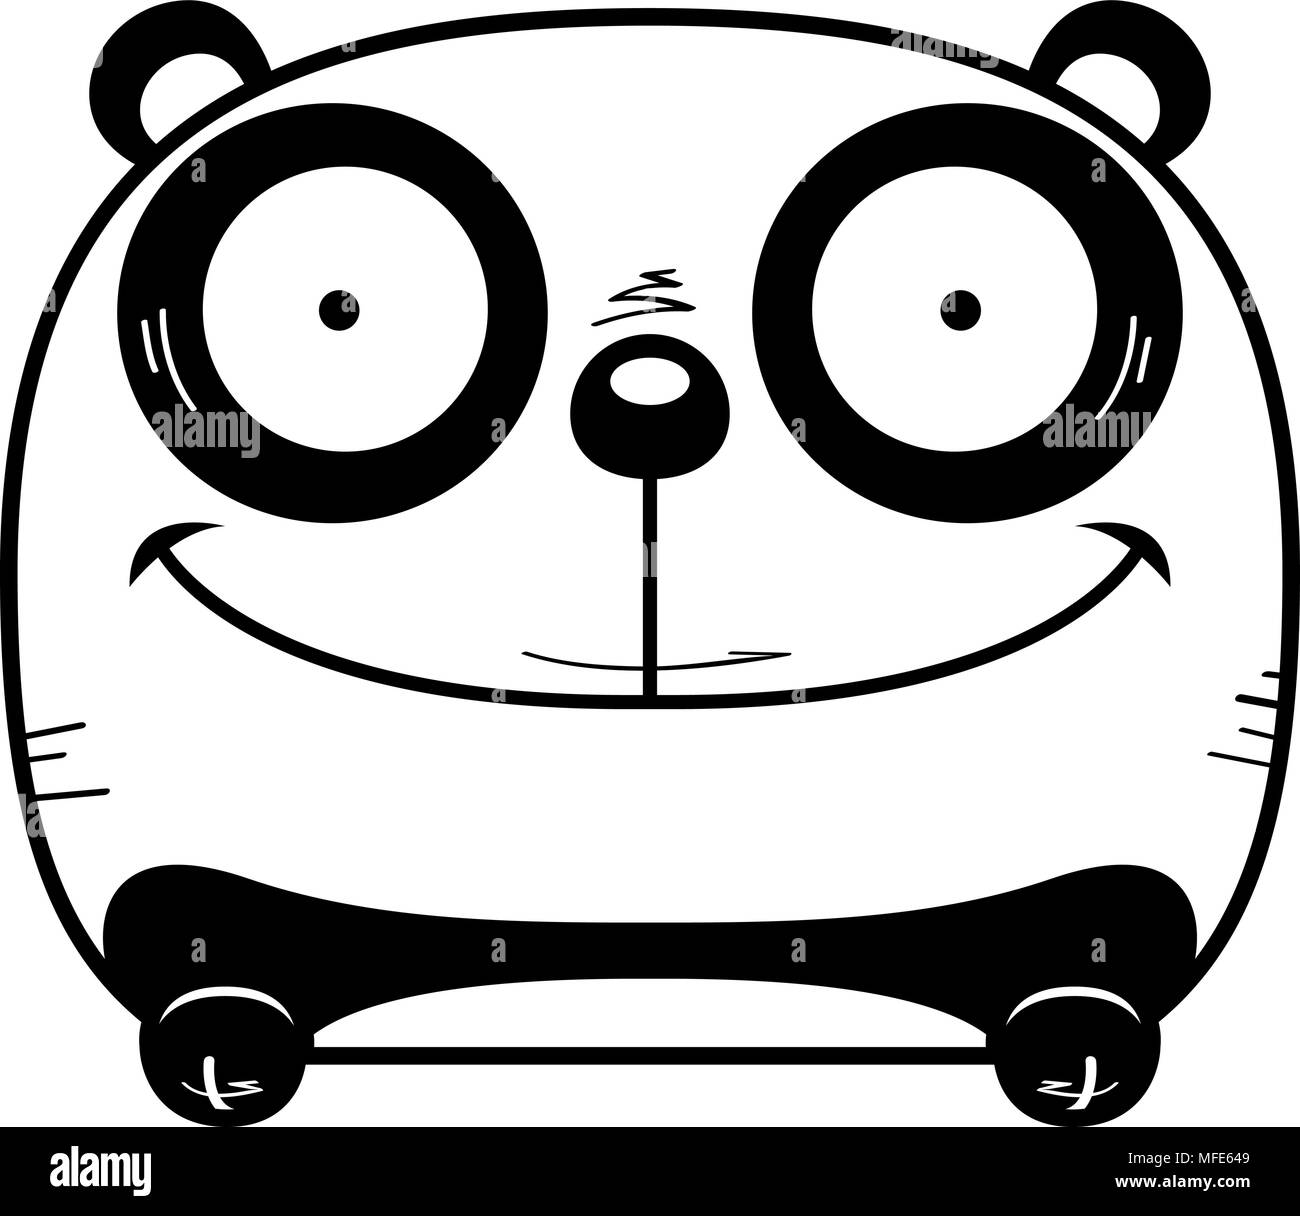 A cartoon illustration of a panda cub peeking over an object. Stock Vector